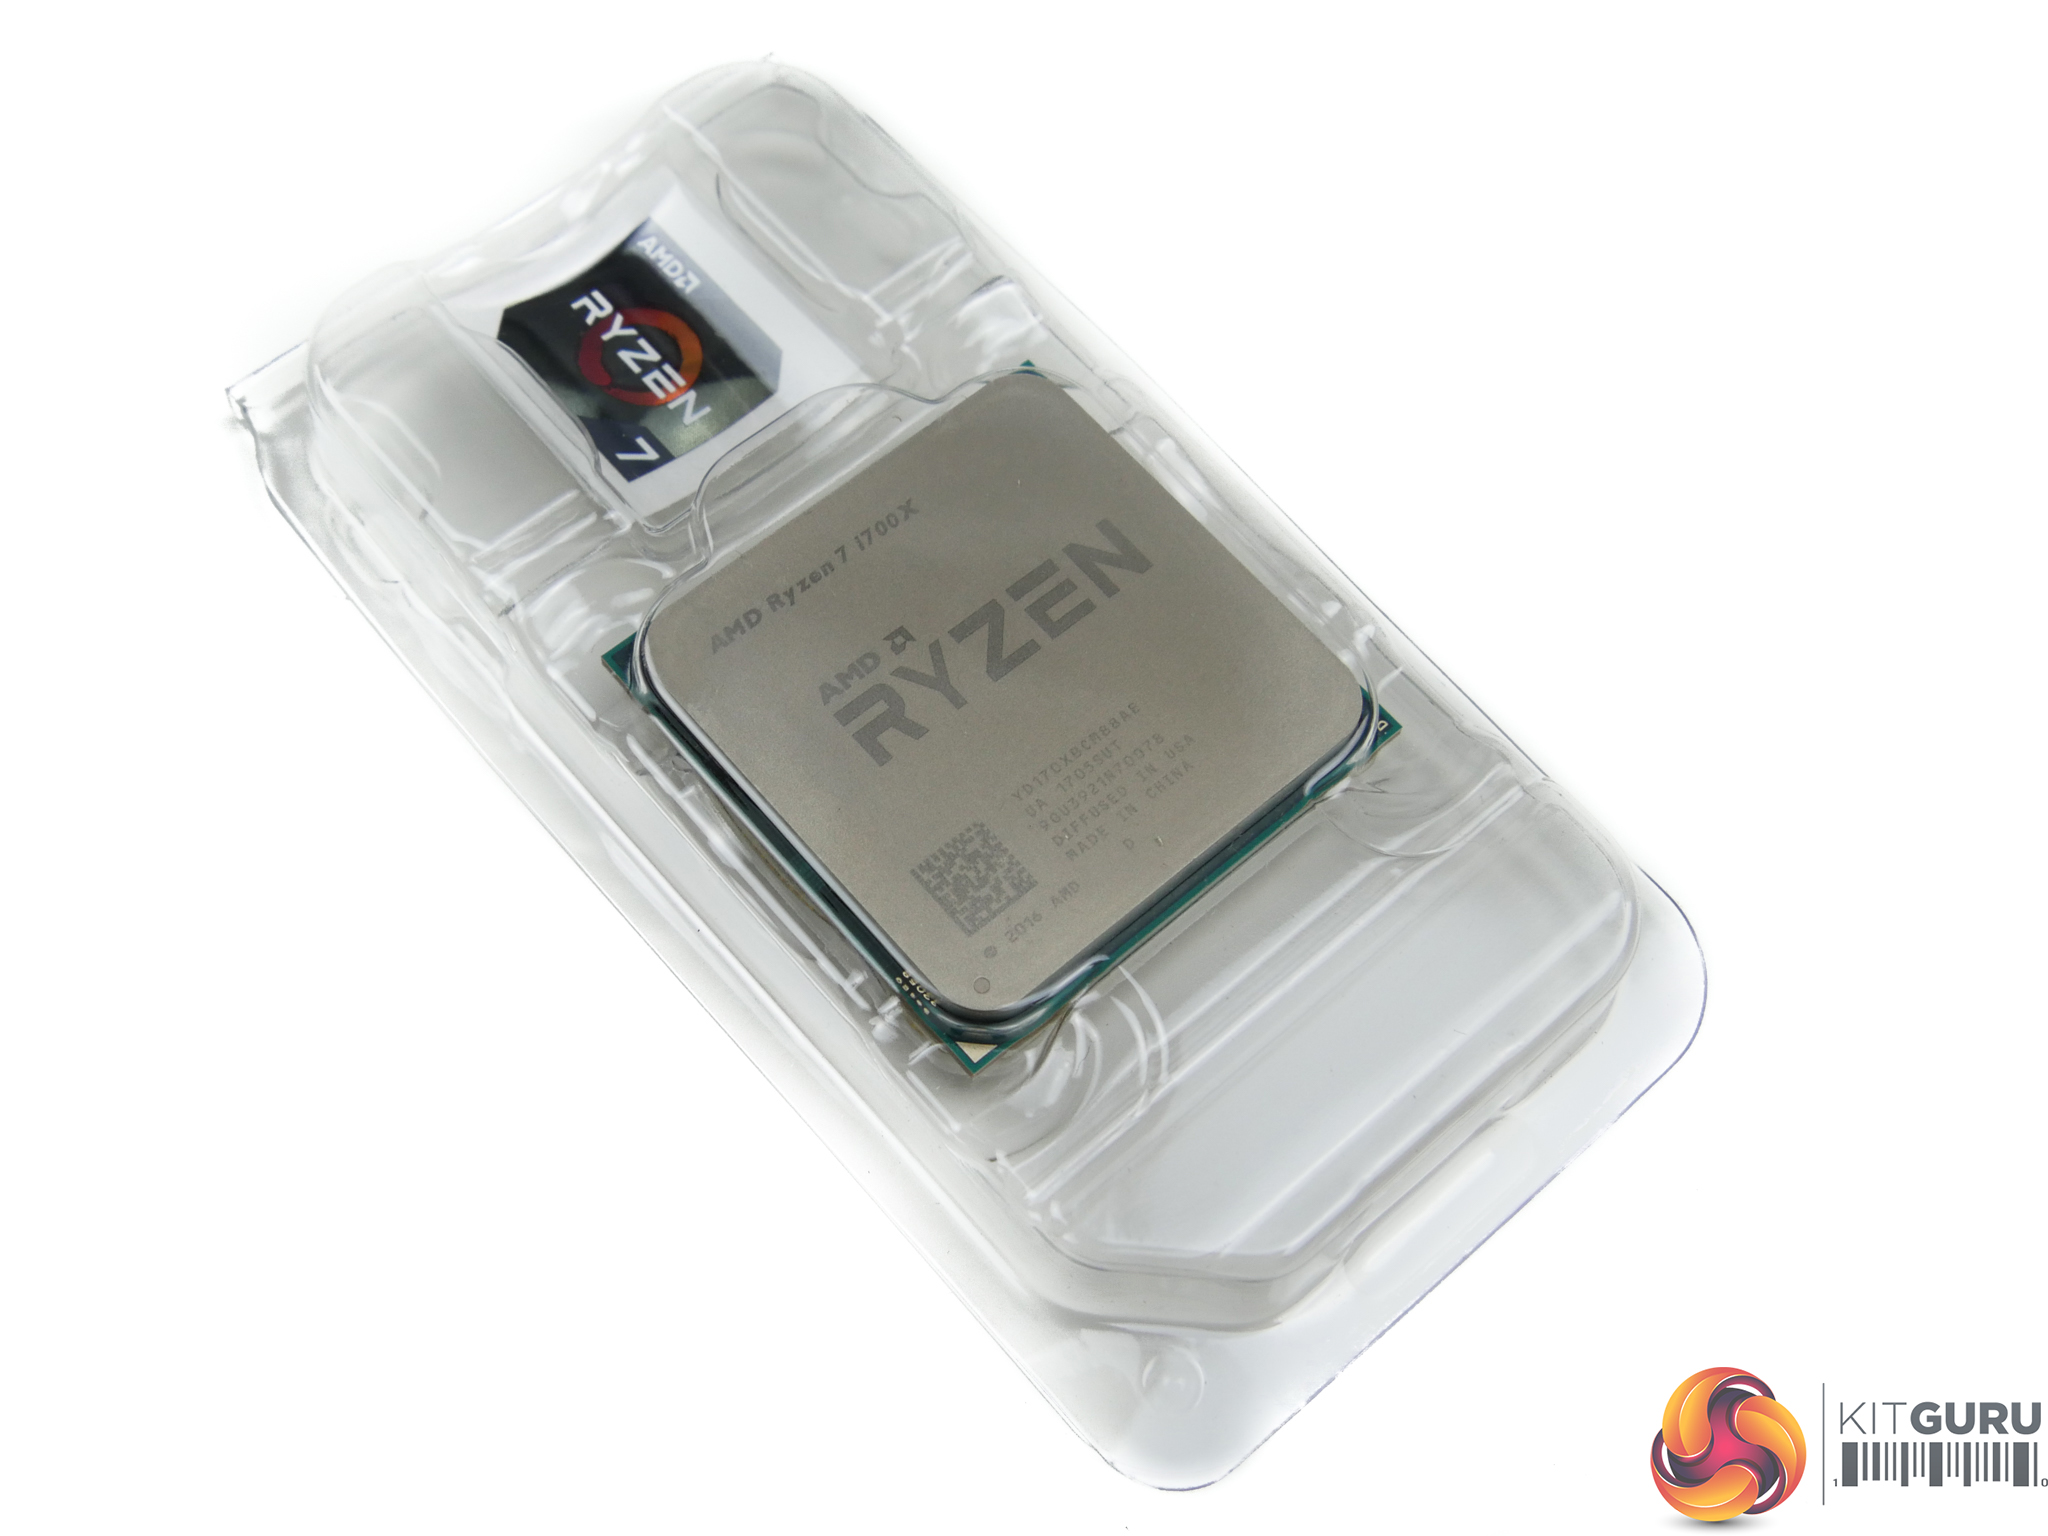 AMD Ryzen 7 1700X CPU Review | KitGuru